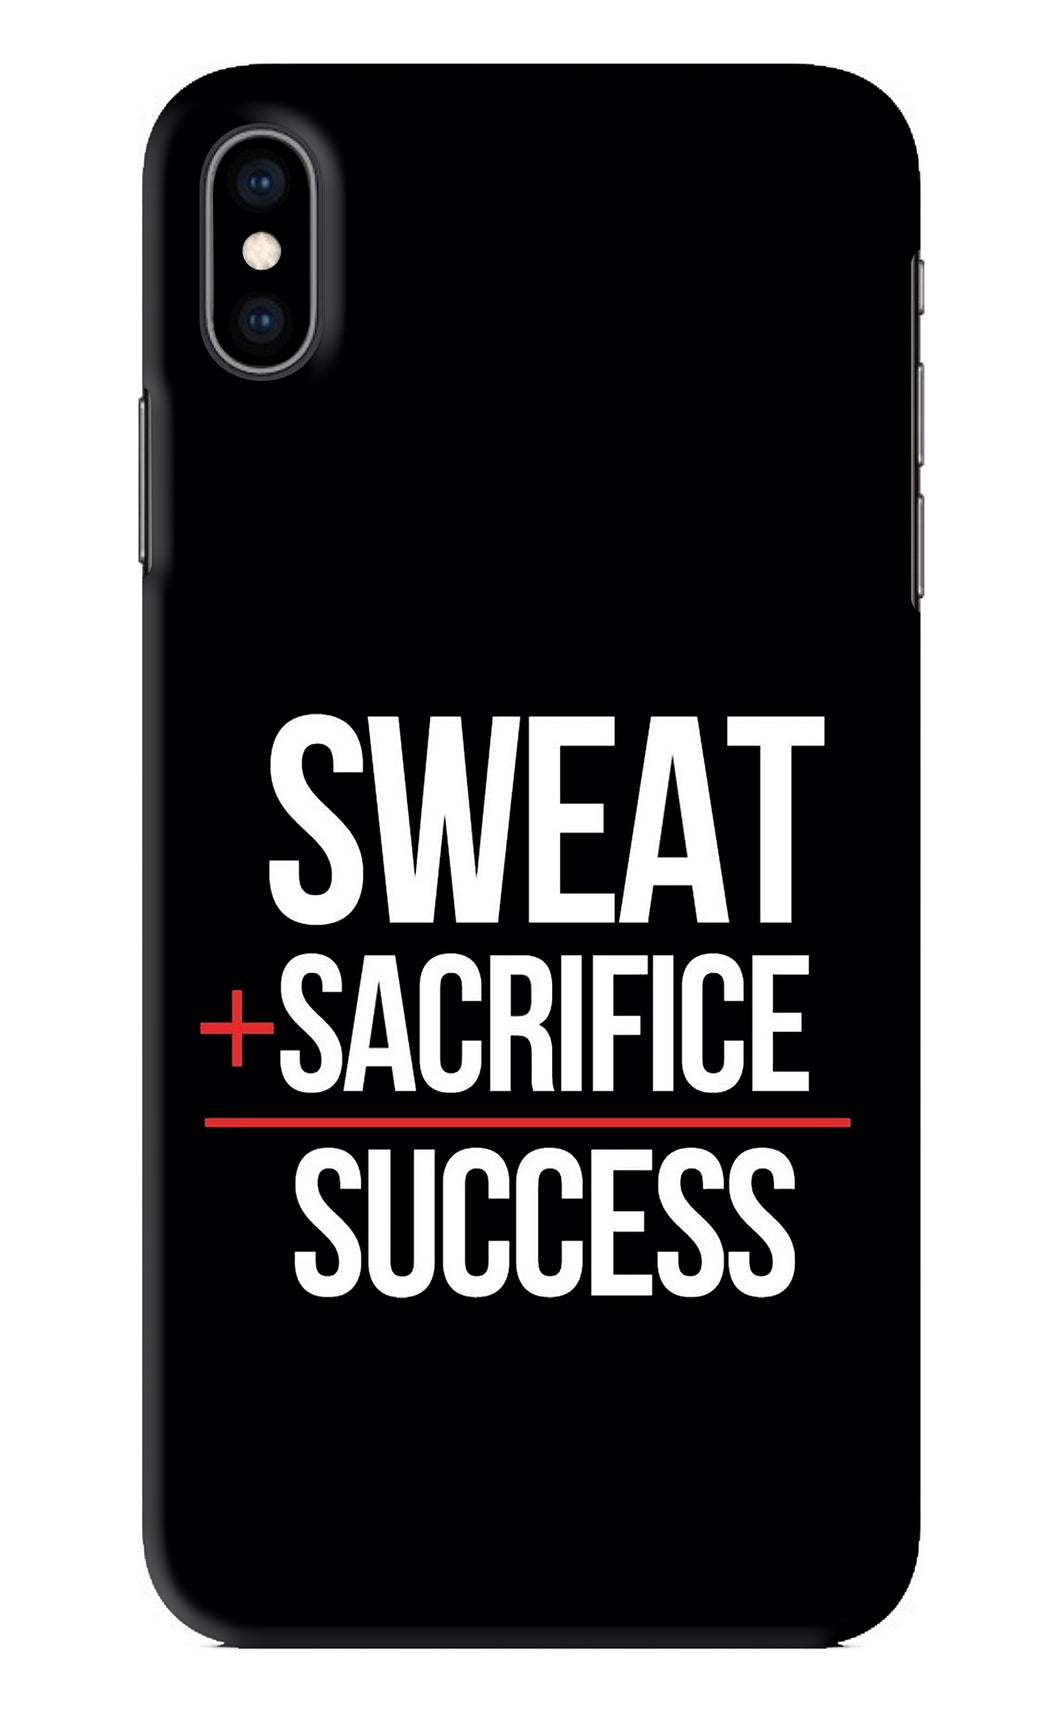 Sweat Sacrifice Success iPhone XS Max Back Skin Wrap